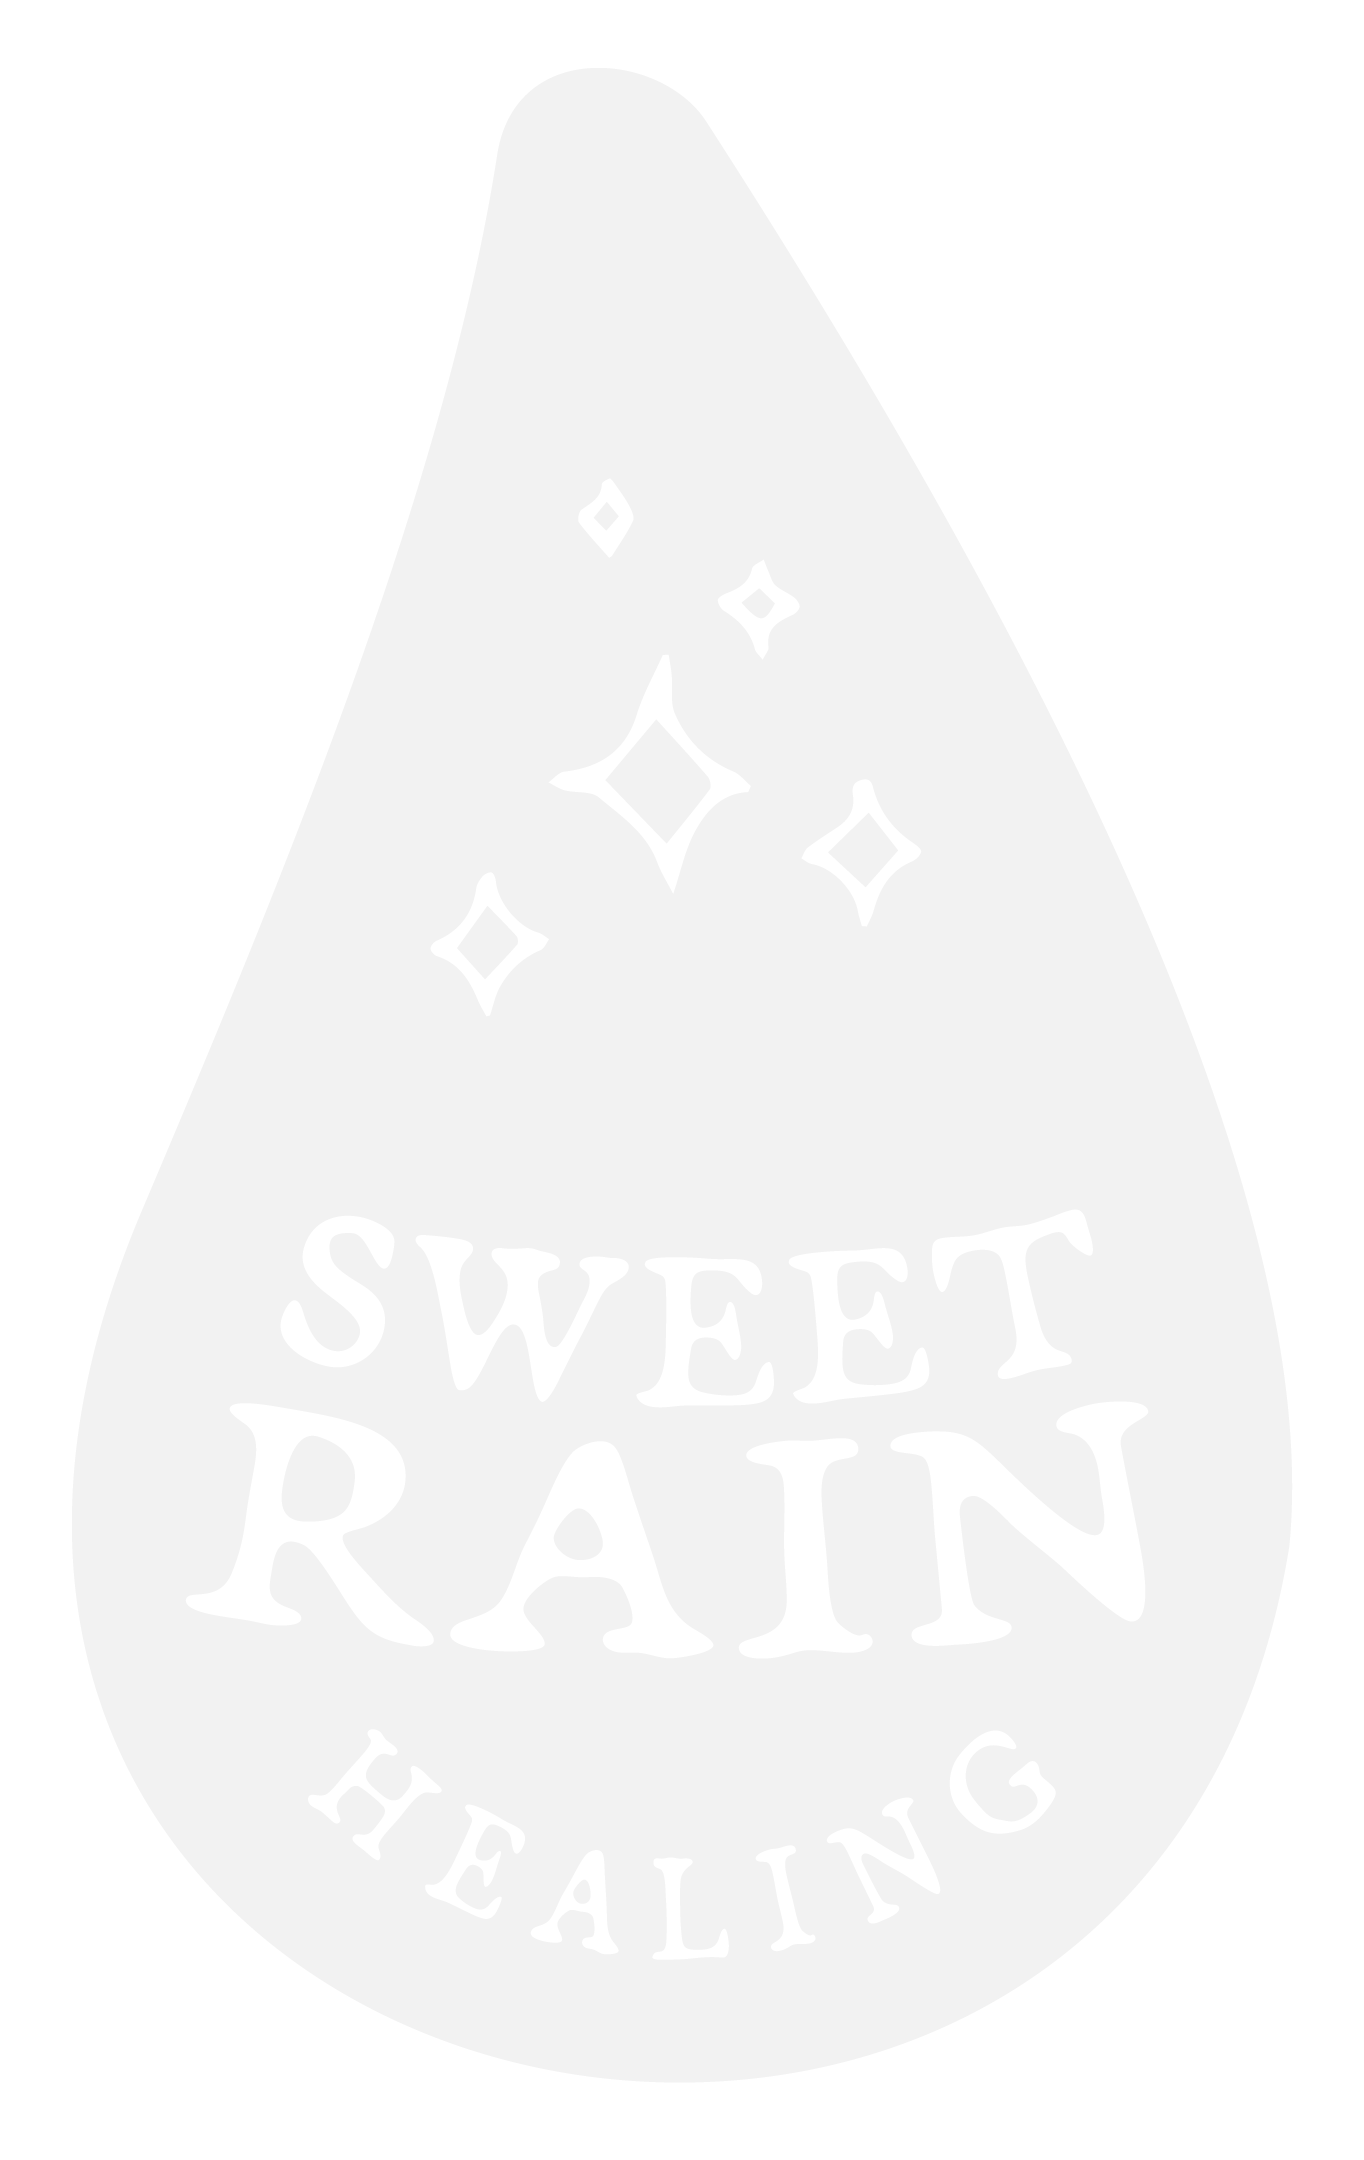 Simmer Pot Kits — Sweet Rain Healing